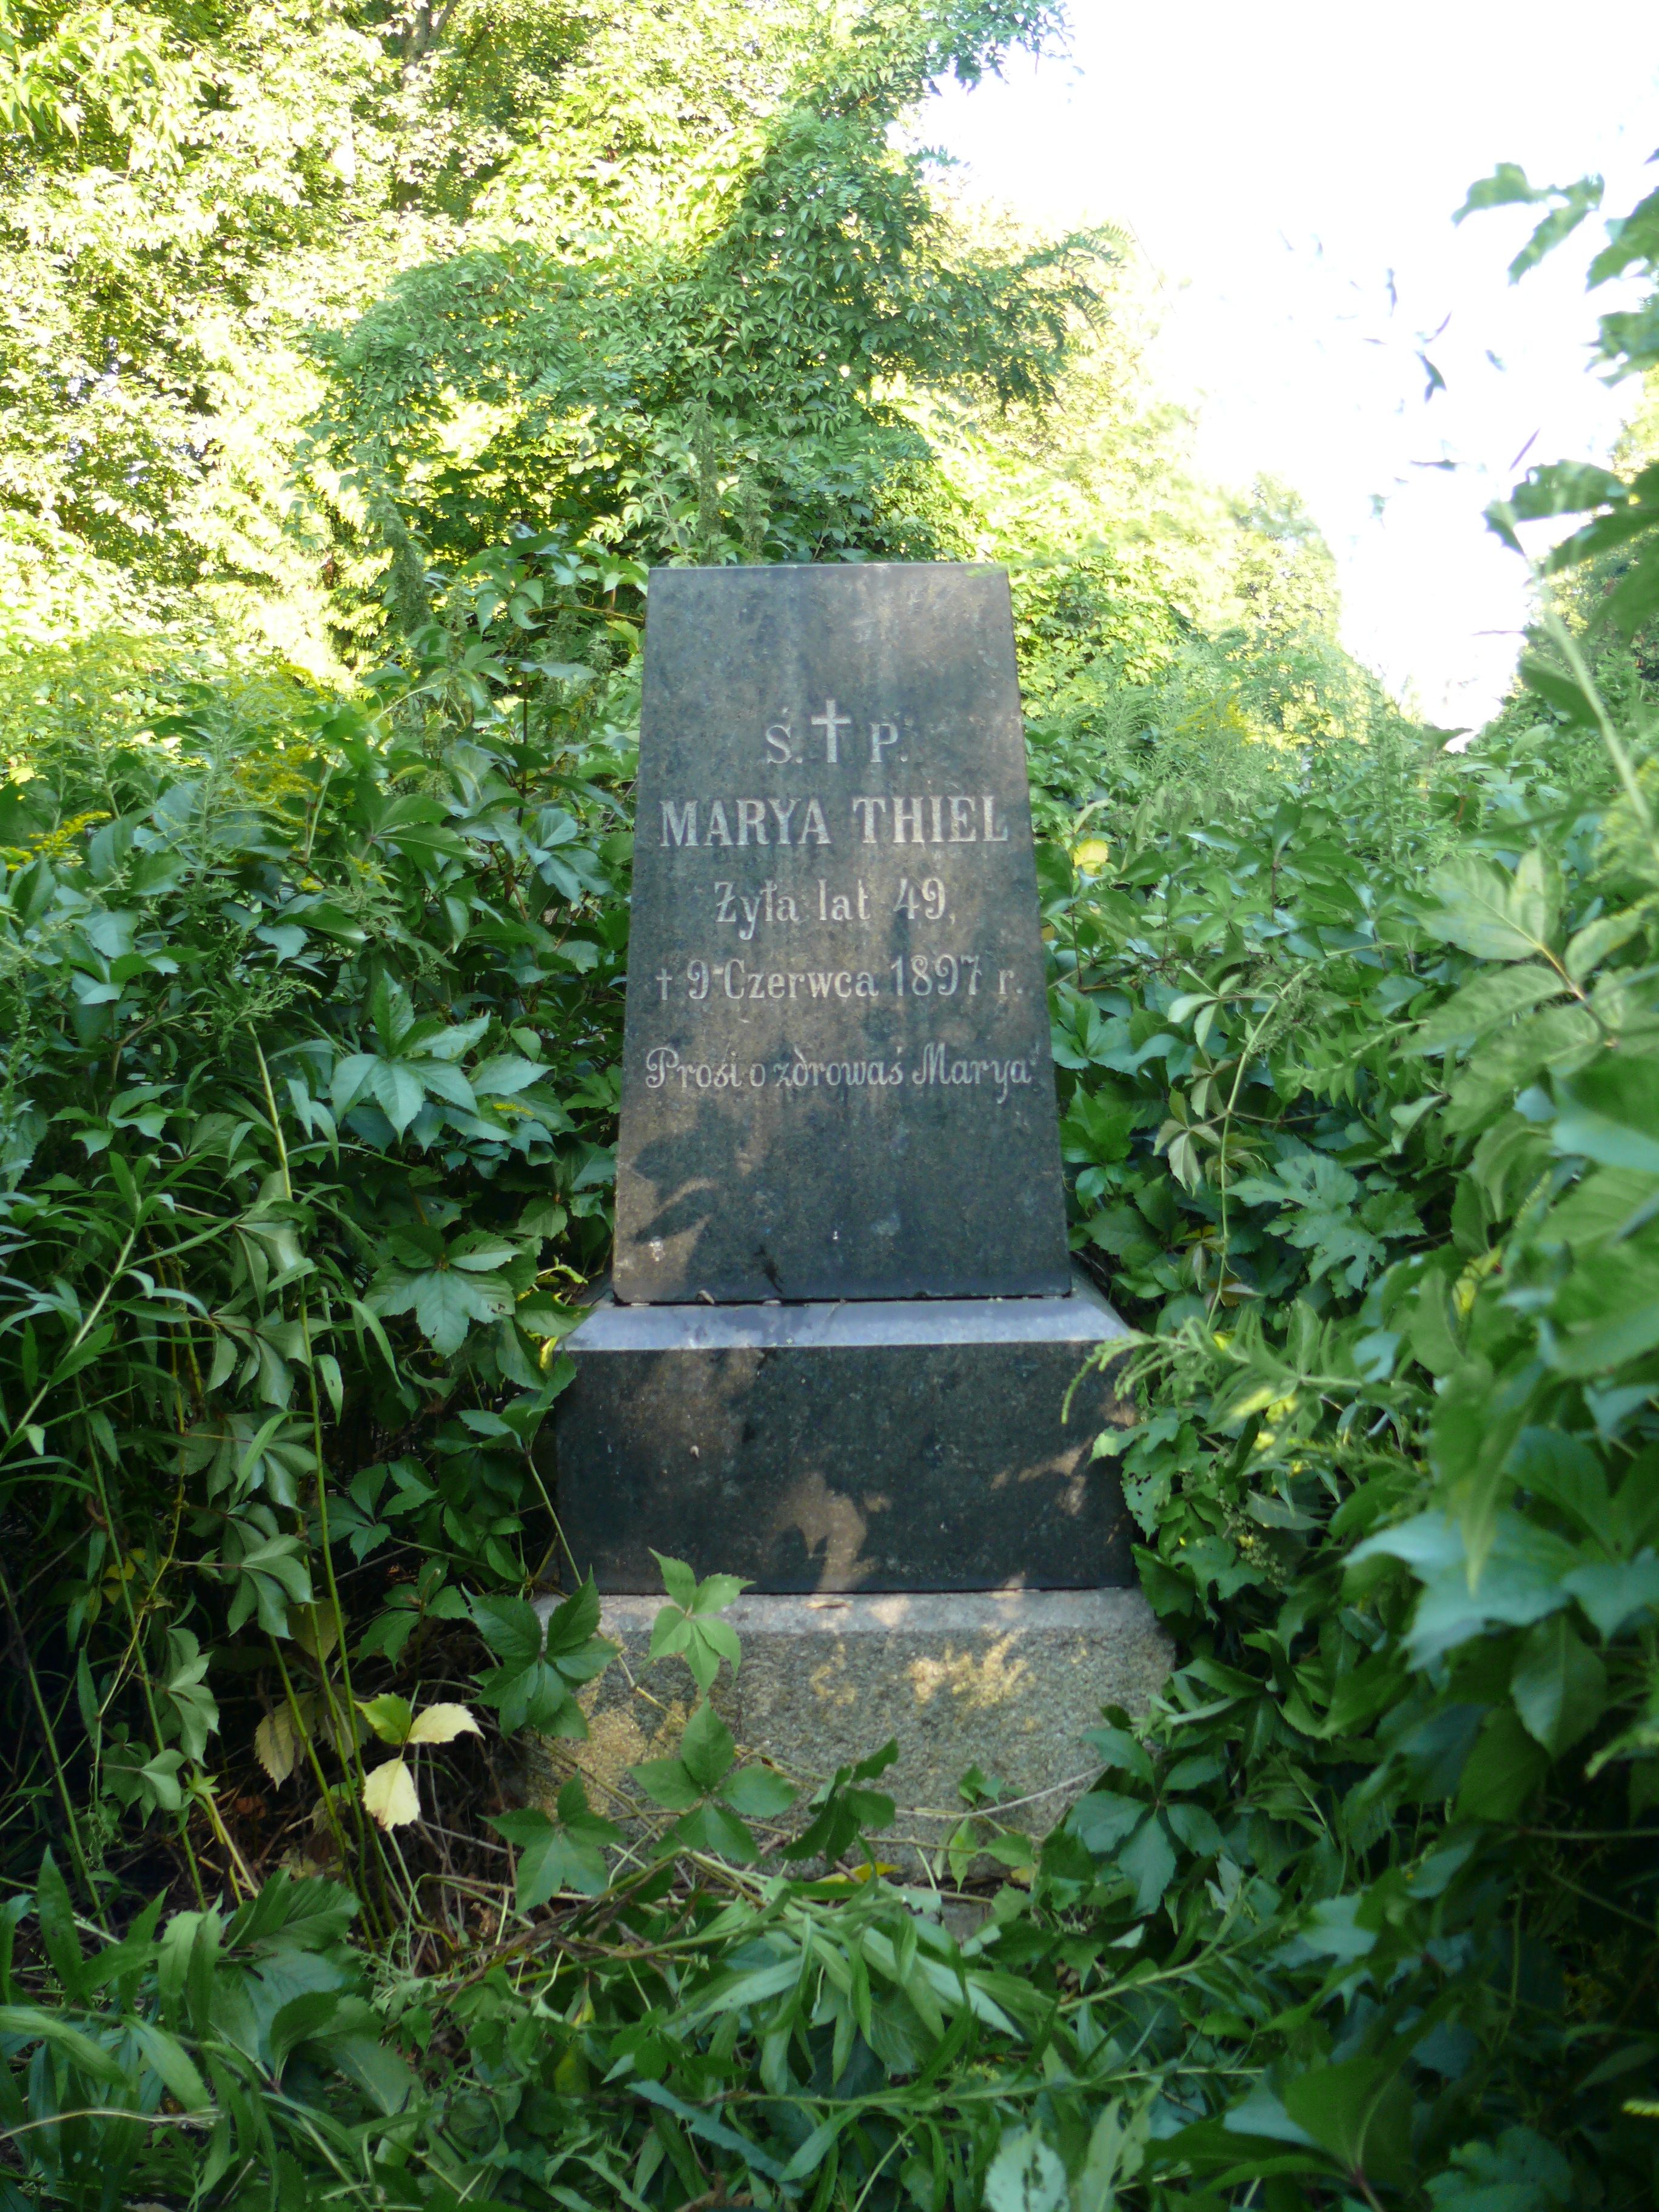 Tombstone of Maria Thiel